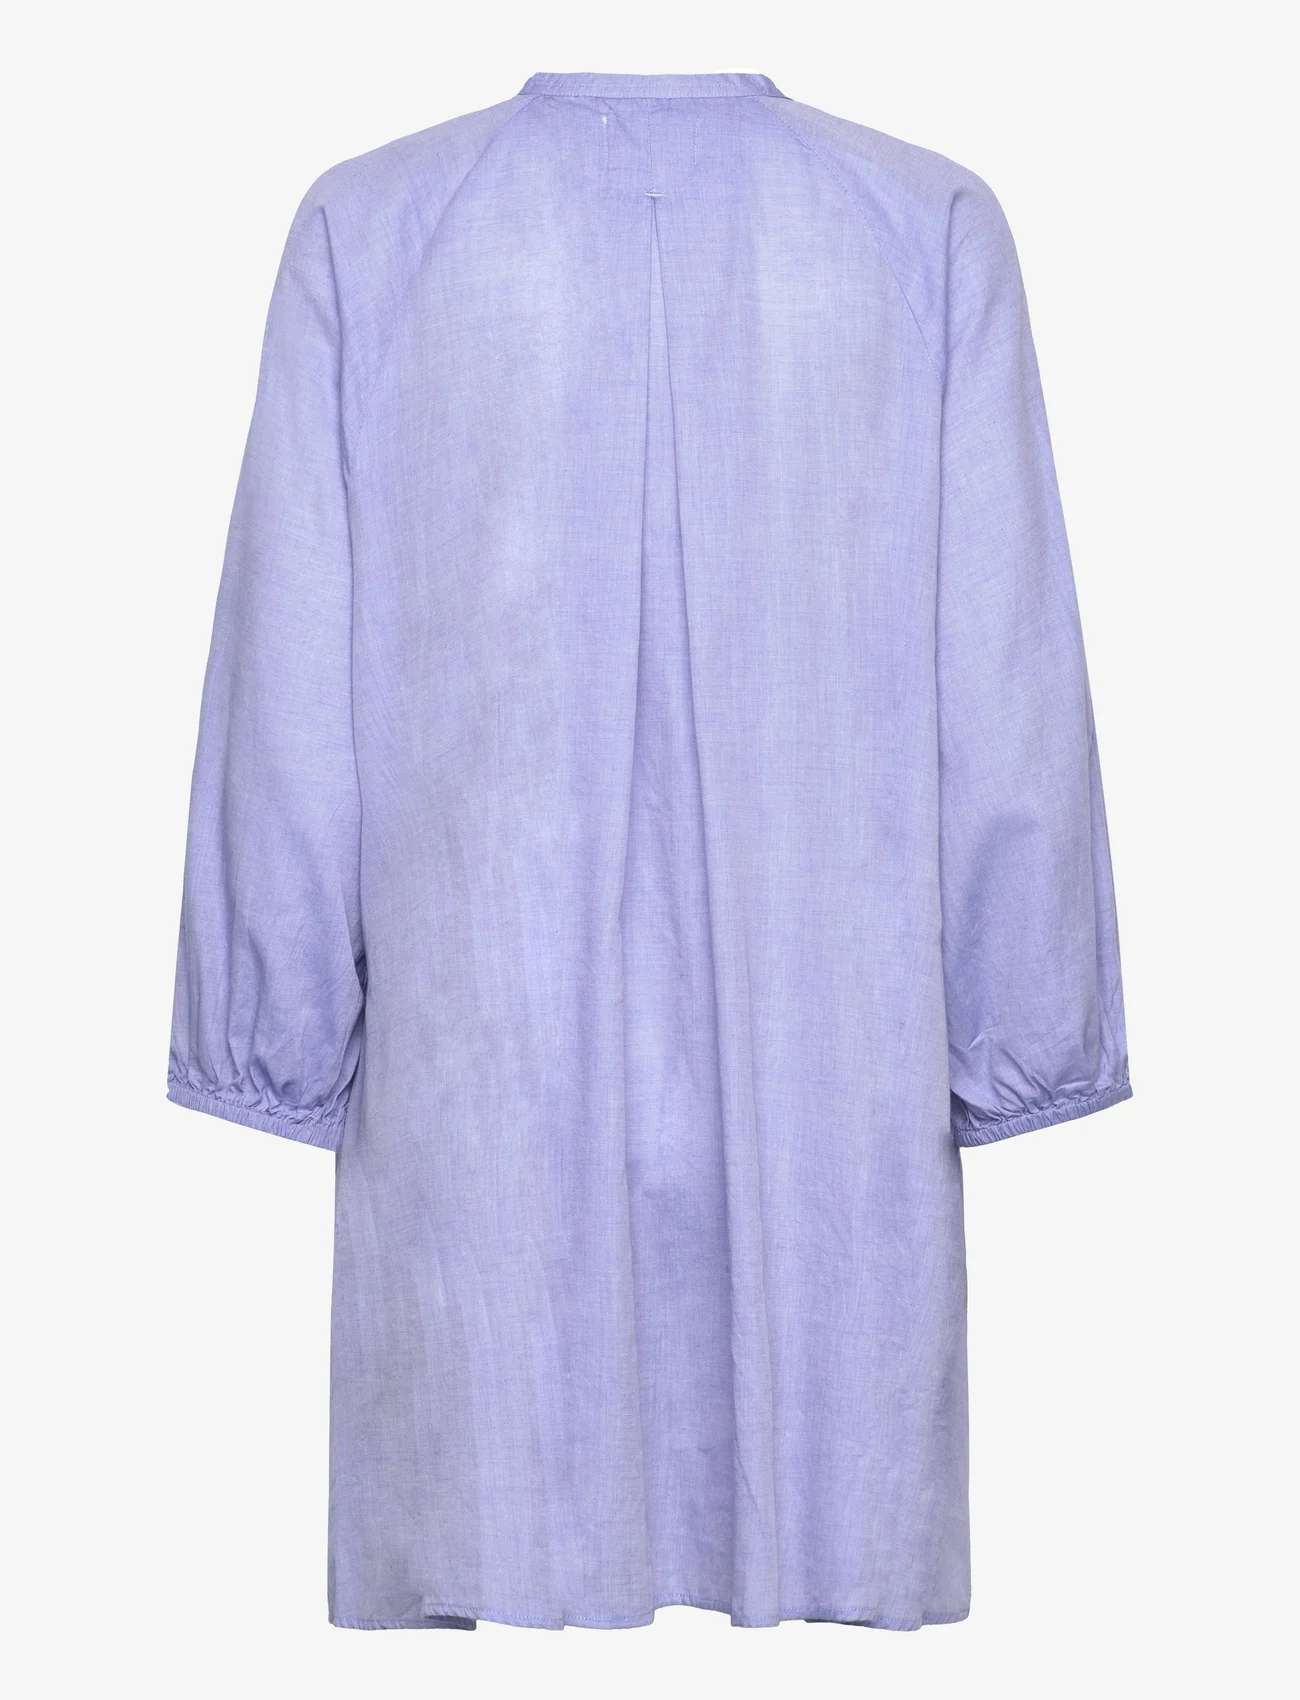 Moshi Moshi Mind - luna tunic dress chambray - shirt dresses - light blue - 1